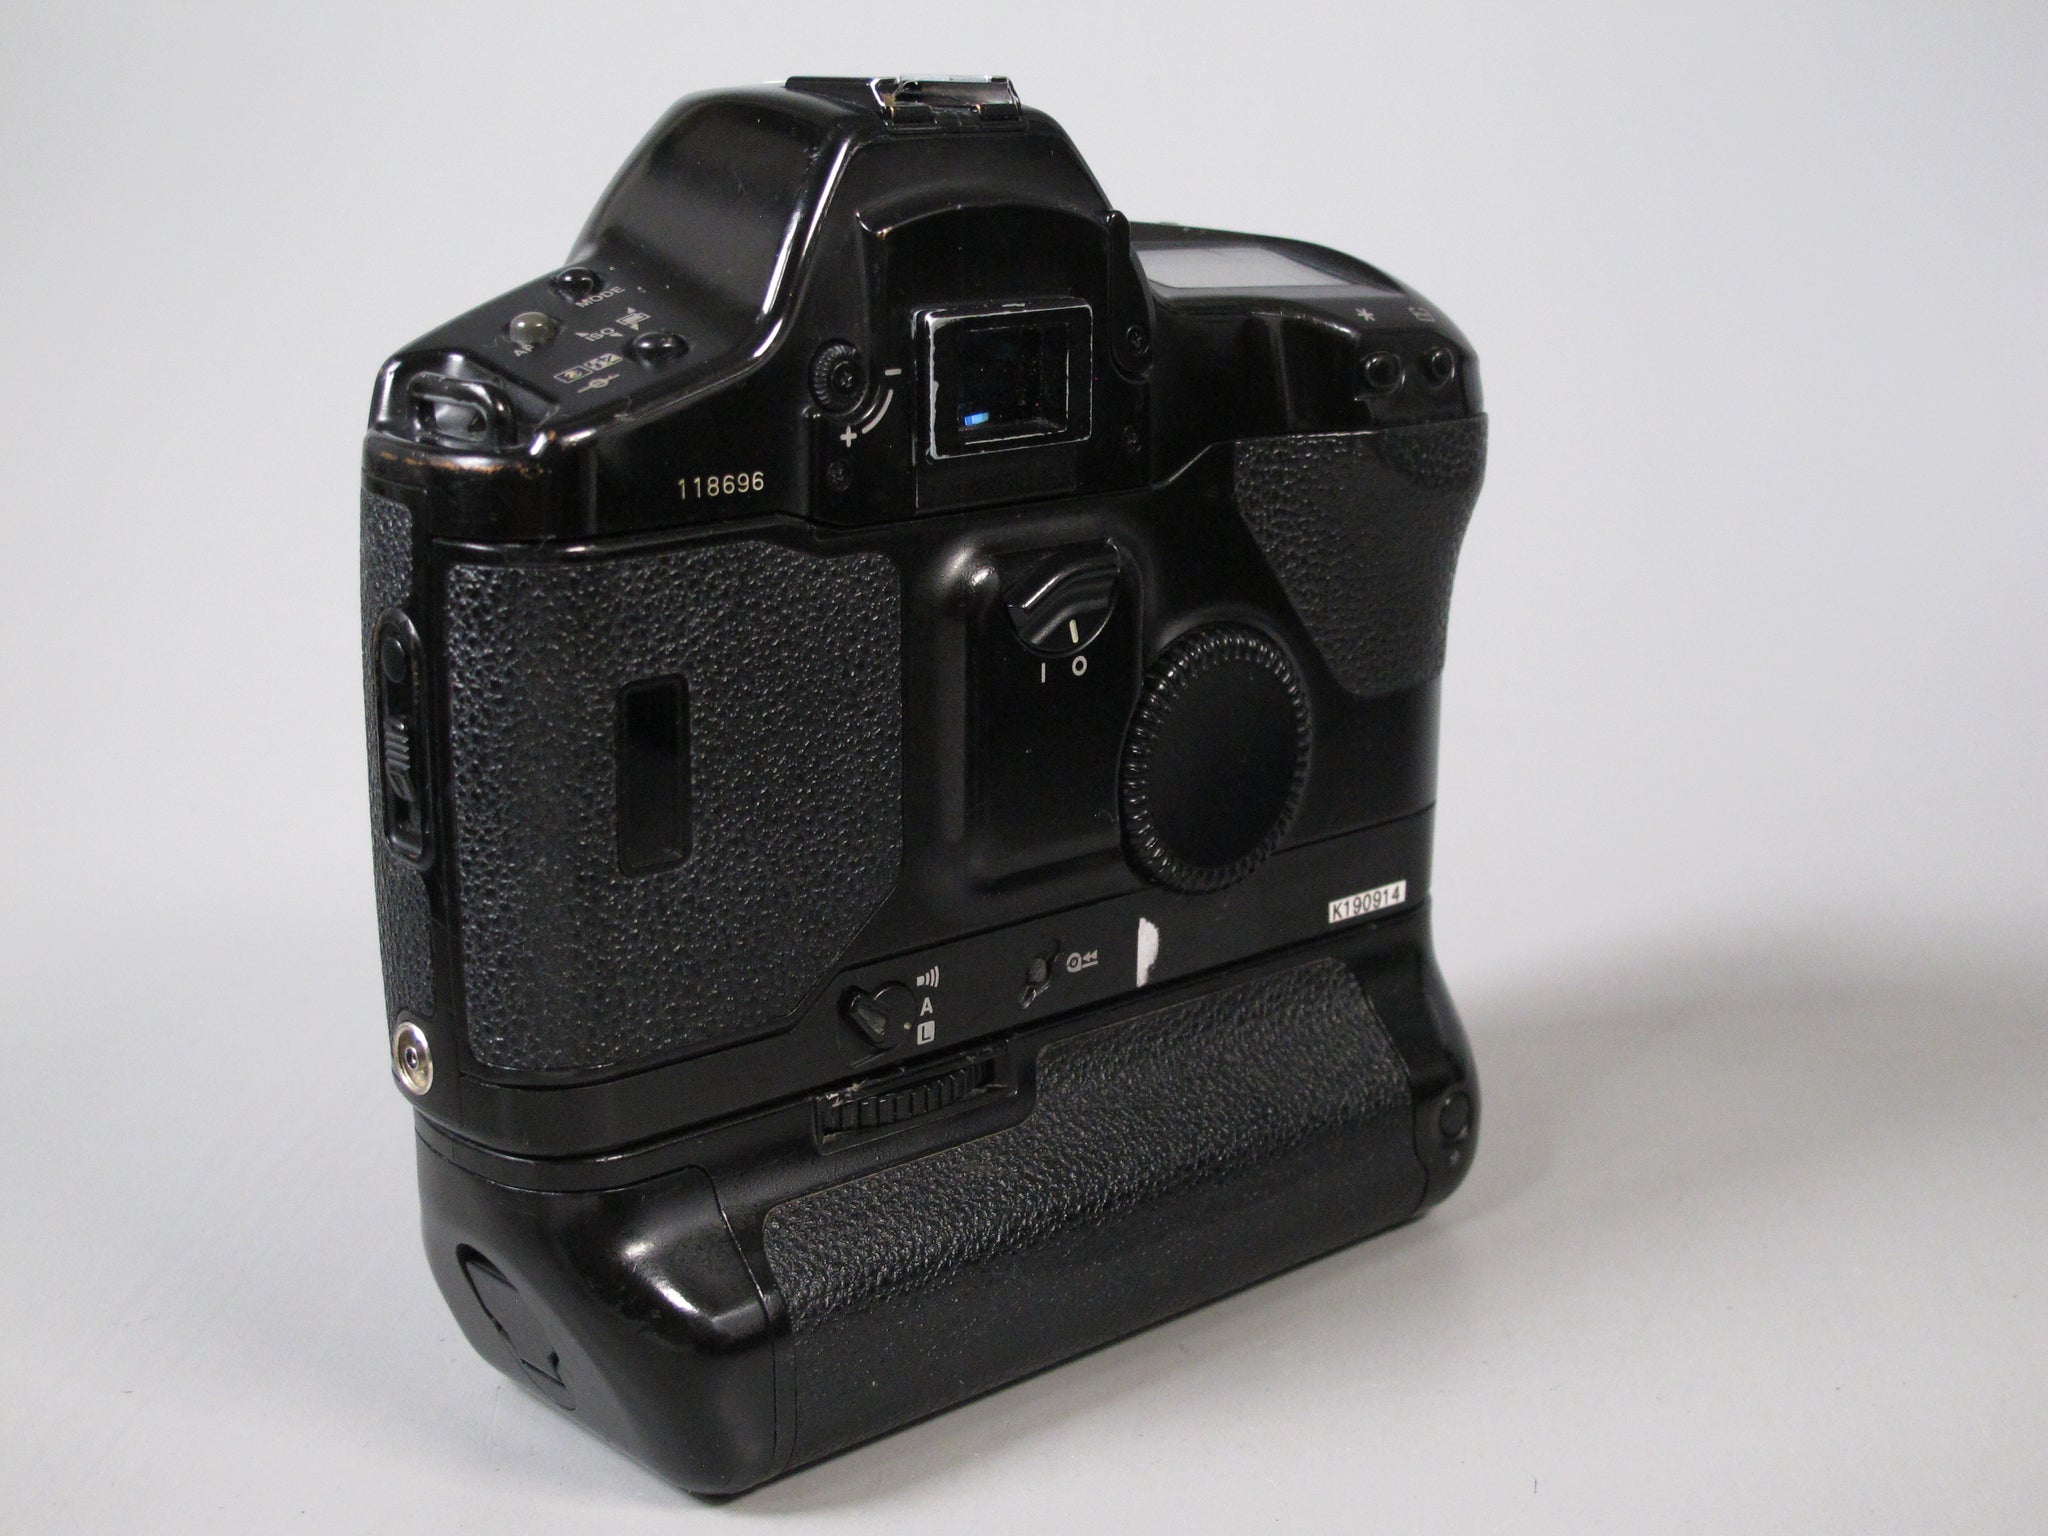 Canon EOS 1-N 35mm Camera Body – Phototek Canada